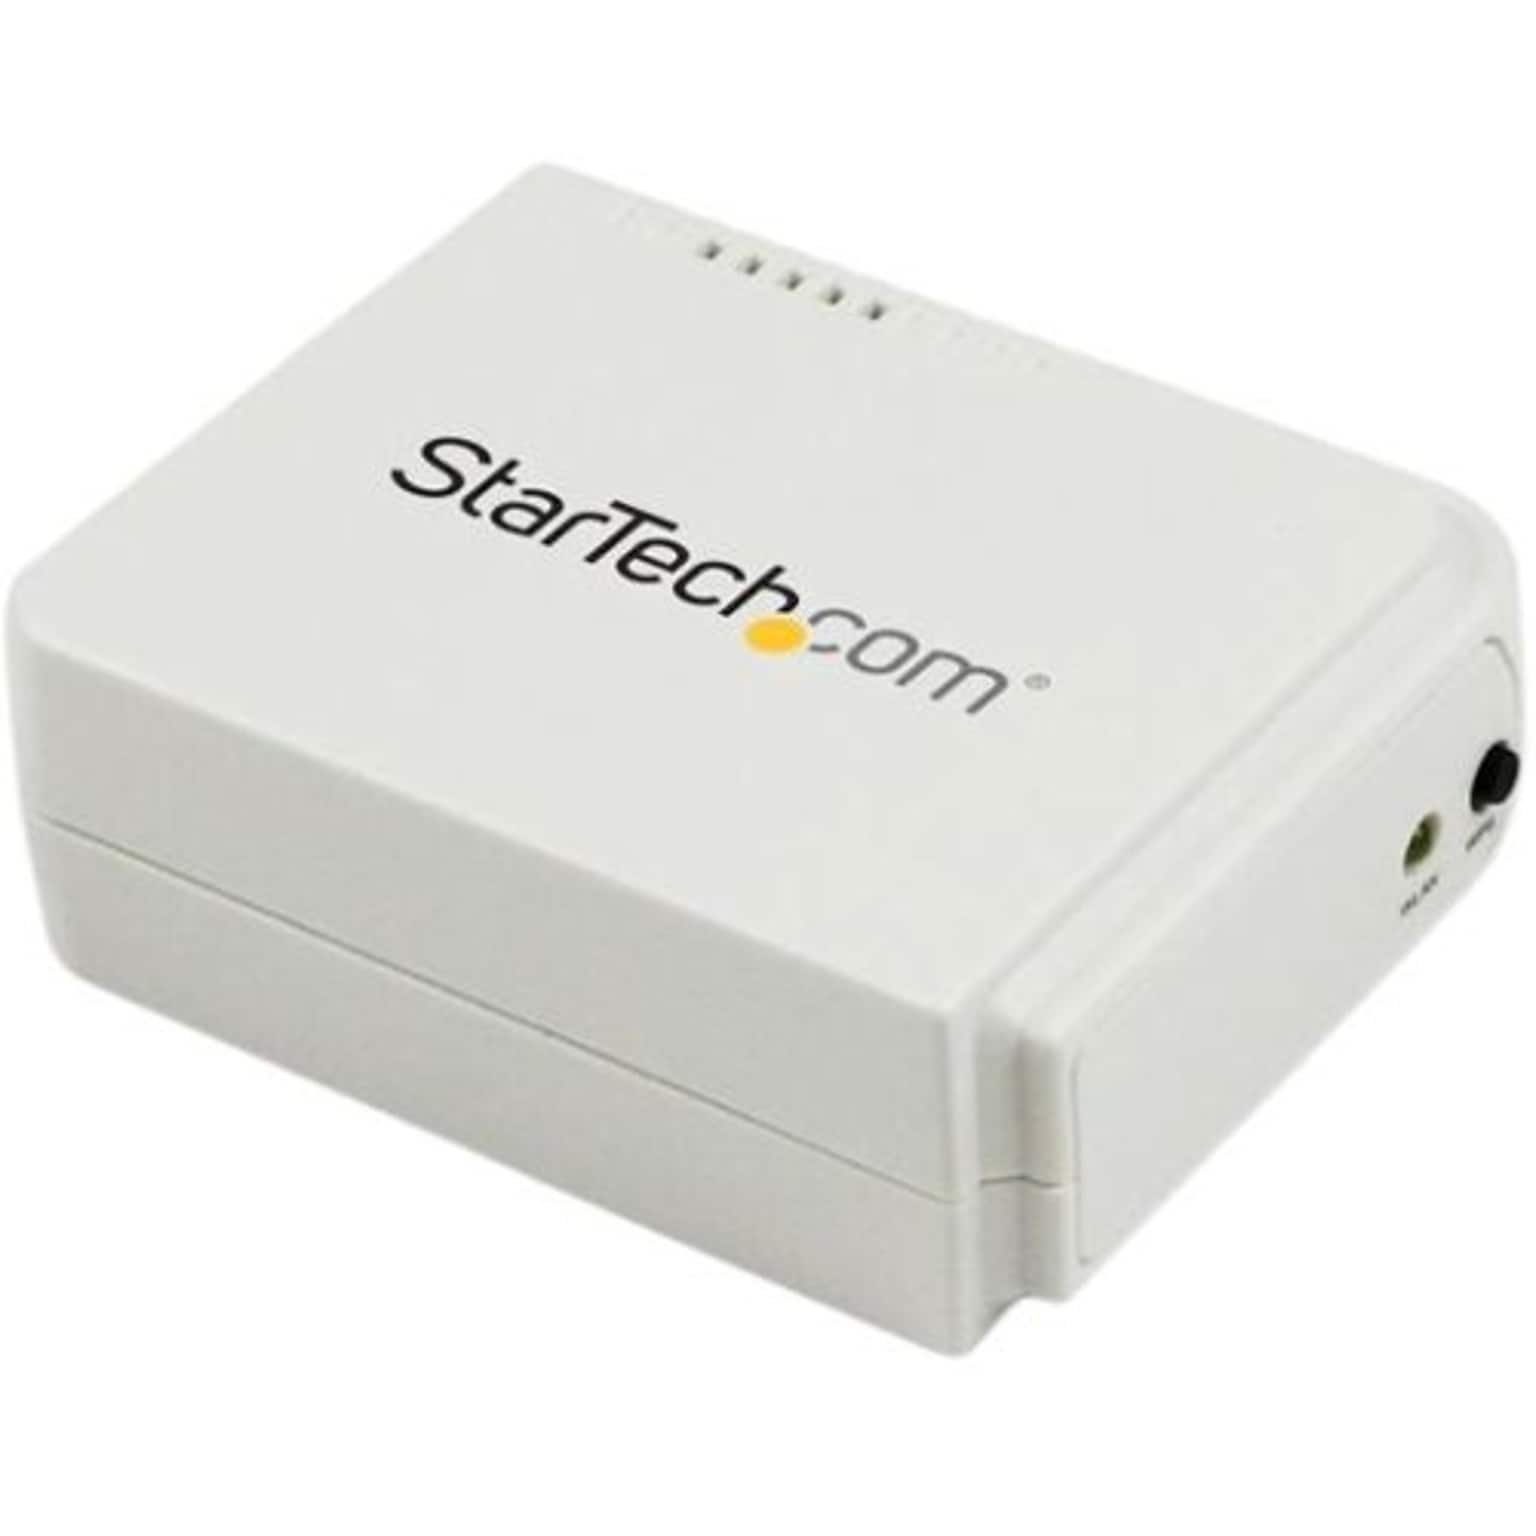 Startech PM1115UW 1 Port USB Wireless N Network Print Server